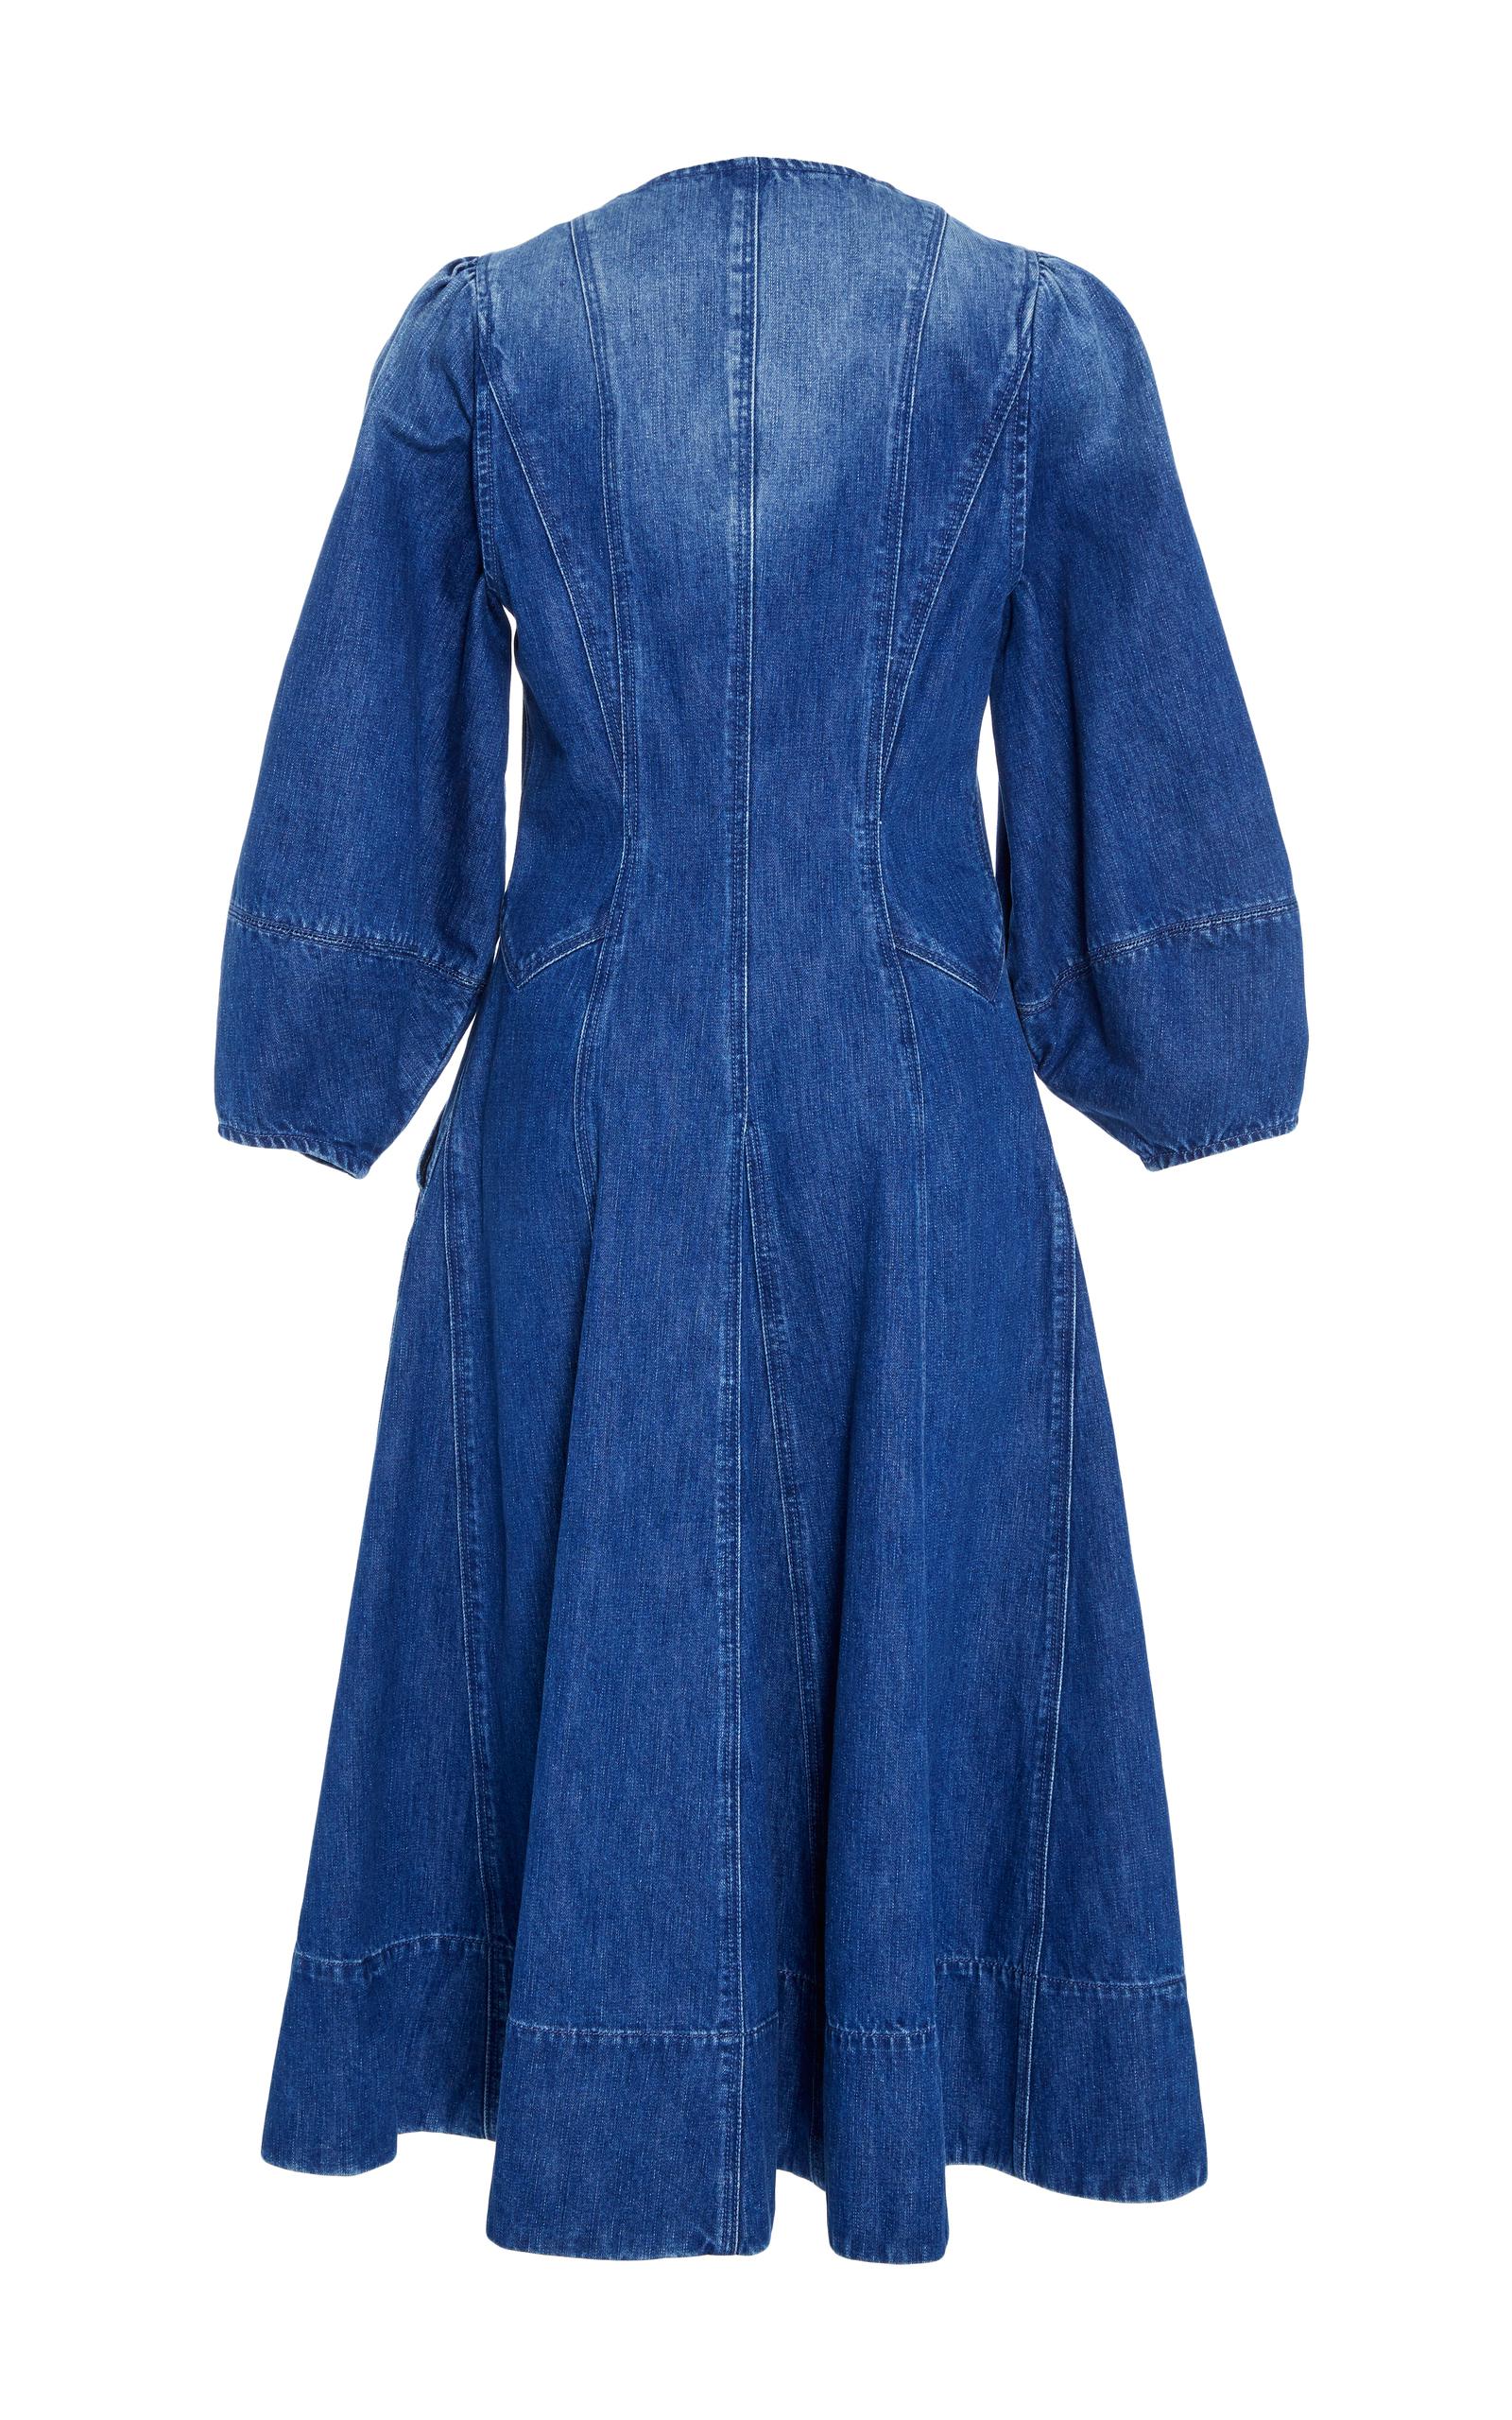 Ulla Johnson Dumas Denim Dress in Blue - Lyst